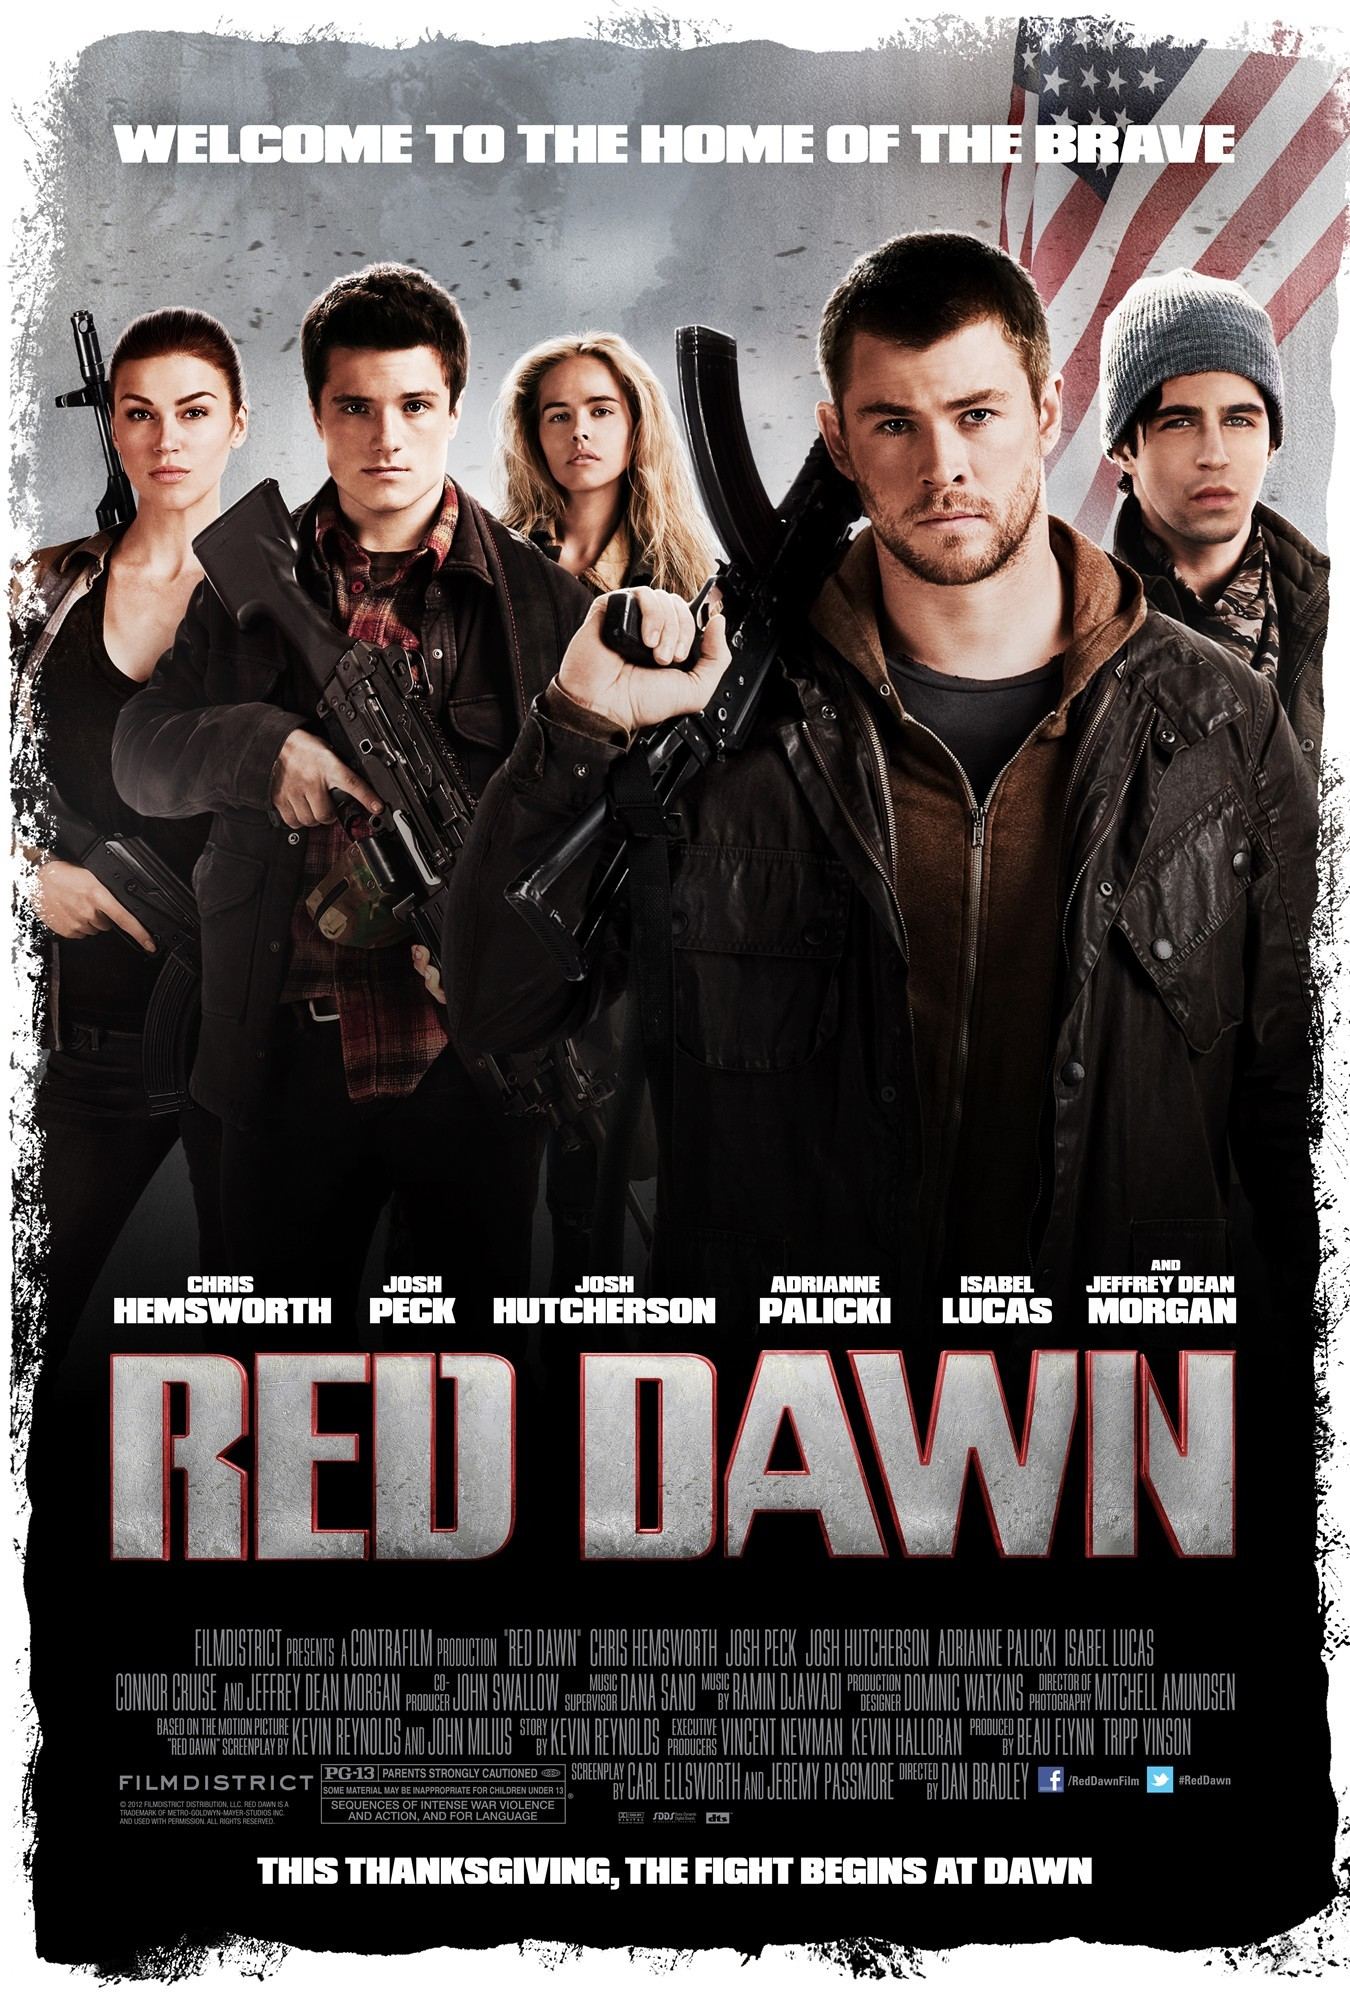 Josh Peck in Red Dawn